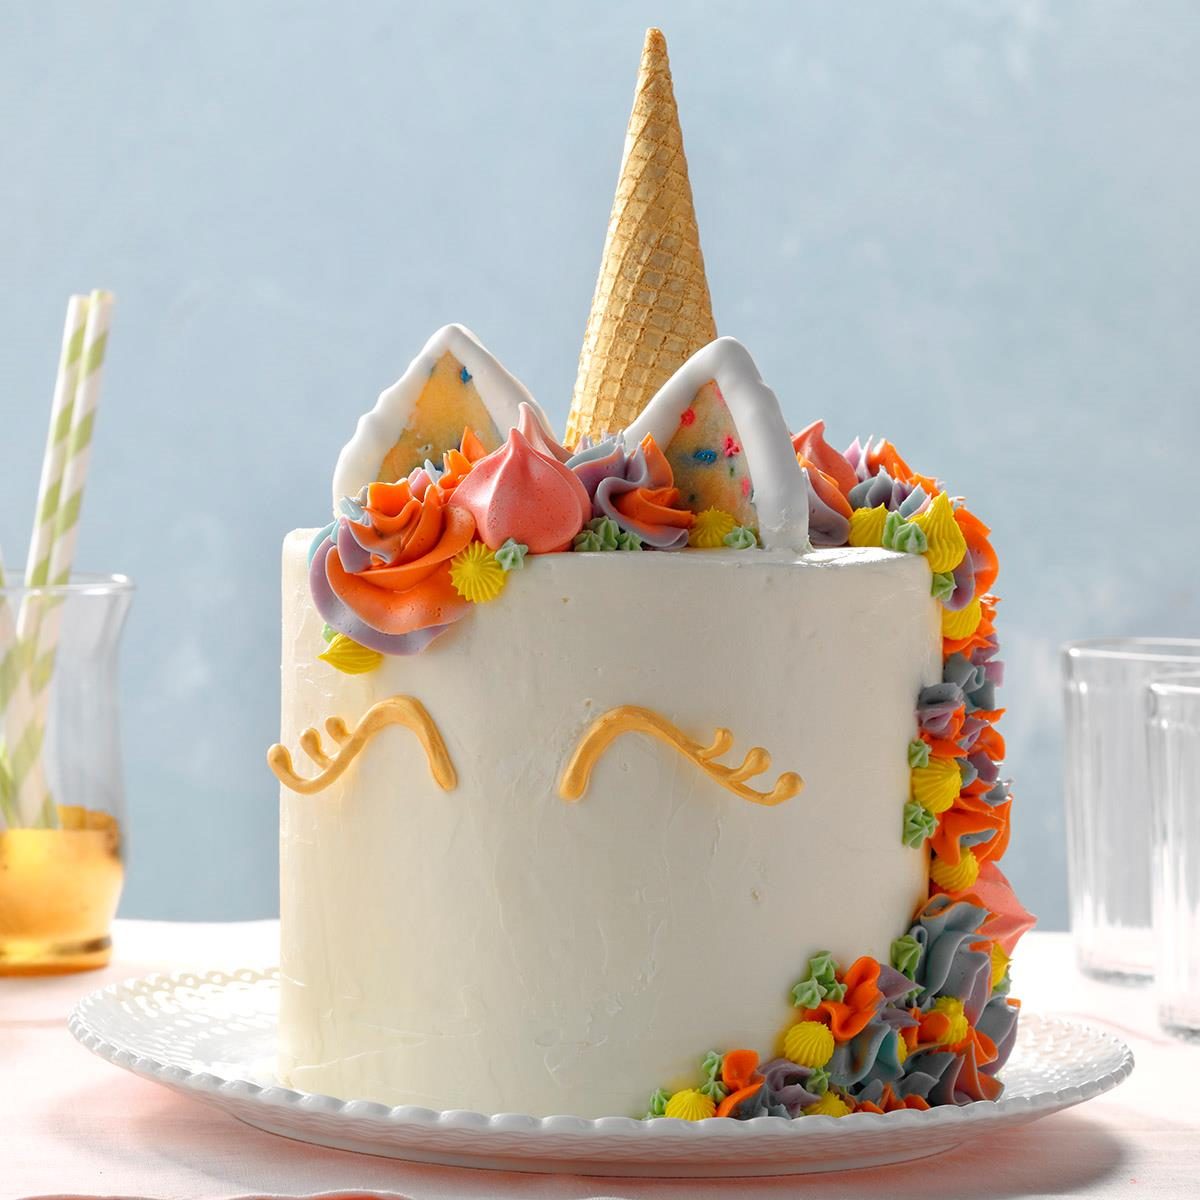 Pretty Cake Ideas For Every Celebration : Textured black birthday cake   Birthday cake for him, 25th birthday cakes, Birthday cake for boyfriend